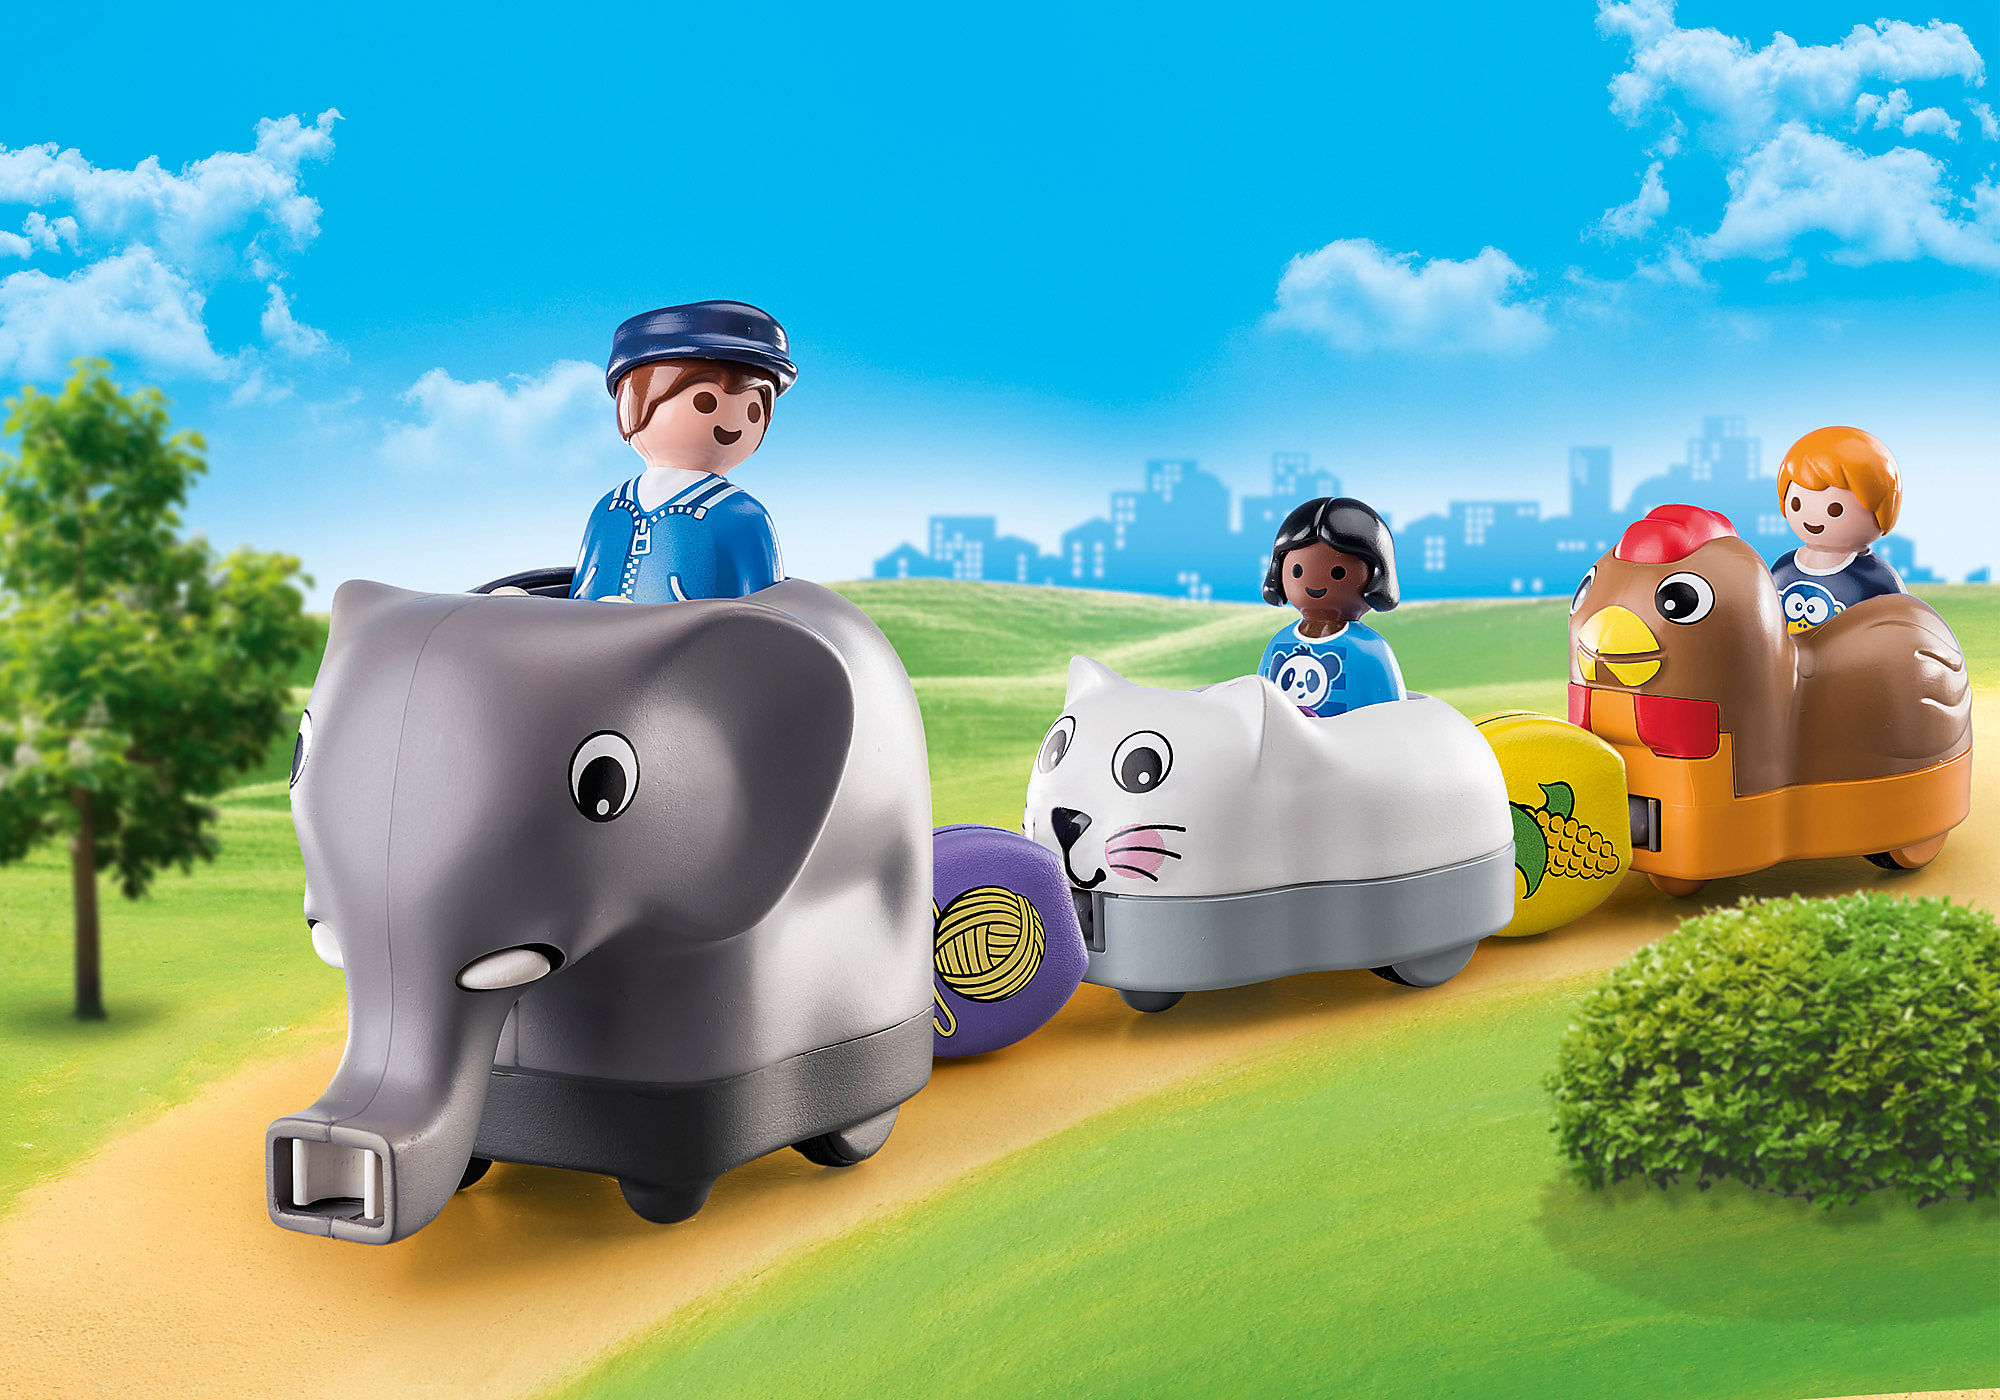 Playmobil 1-2-3 Train Des Animaux - 70405